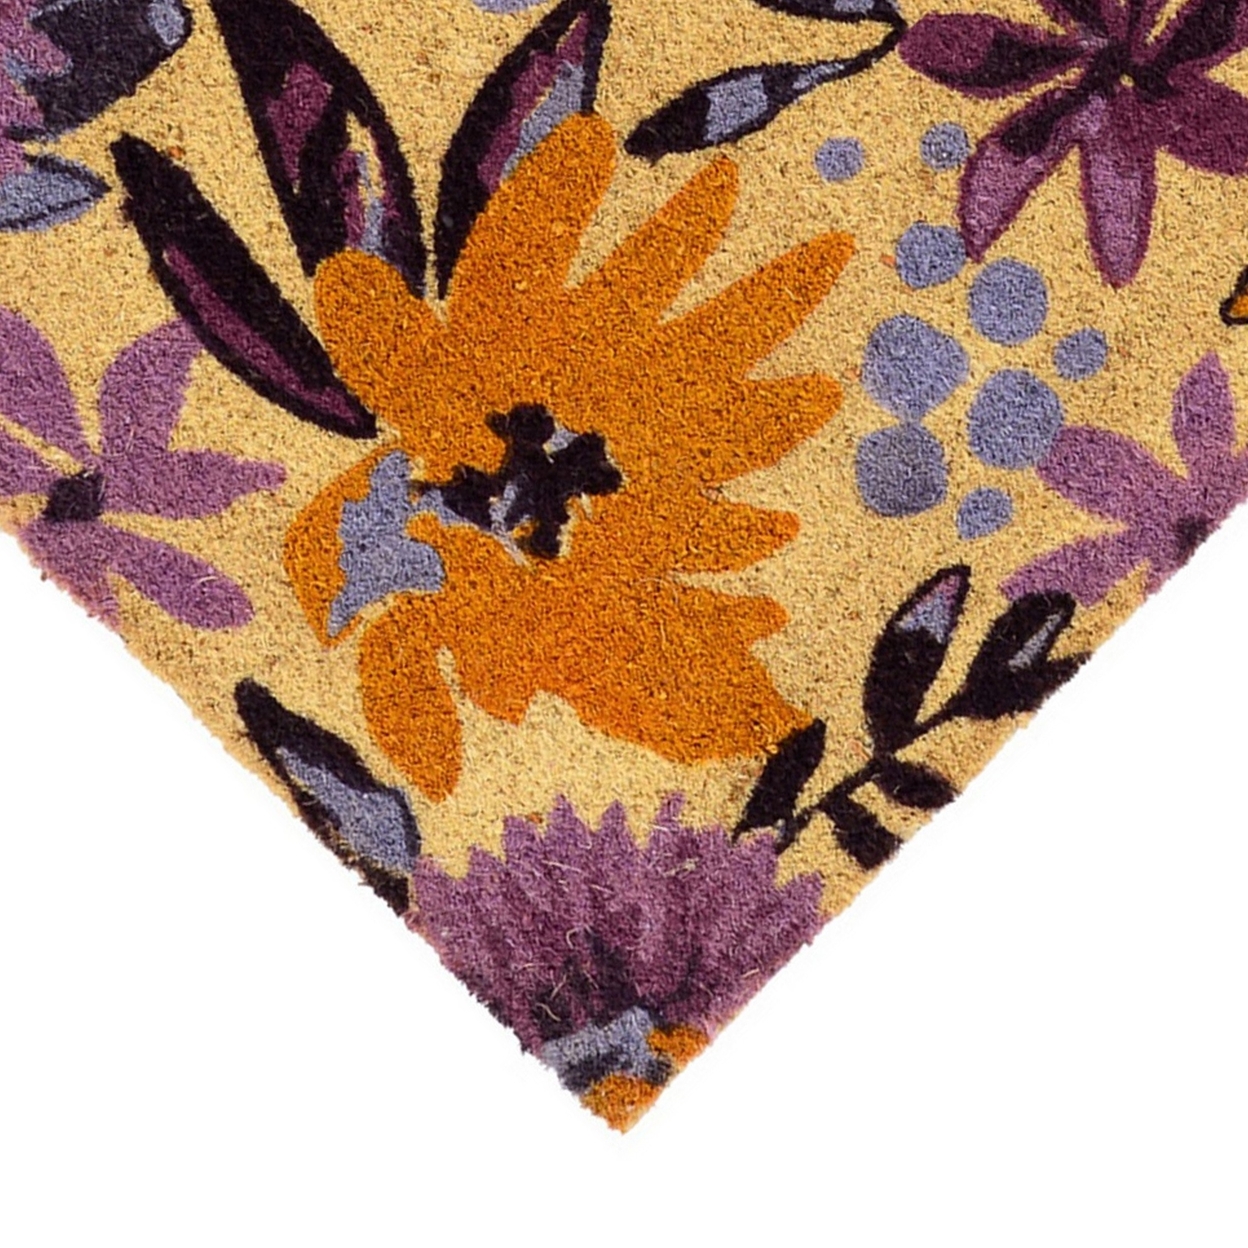 24 X 36 Machine Made Coir Doormat, Fun Purple Floral Print, Ivory Base- Saltoro Sherpi